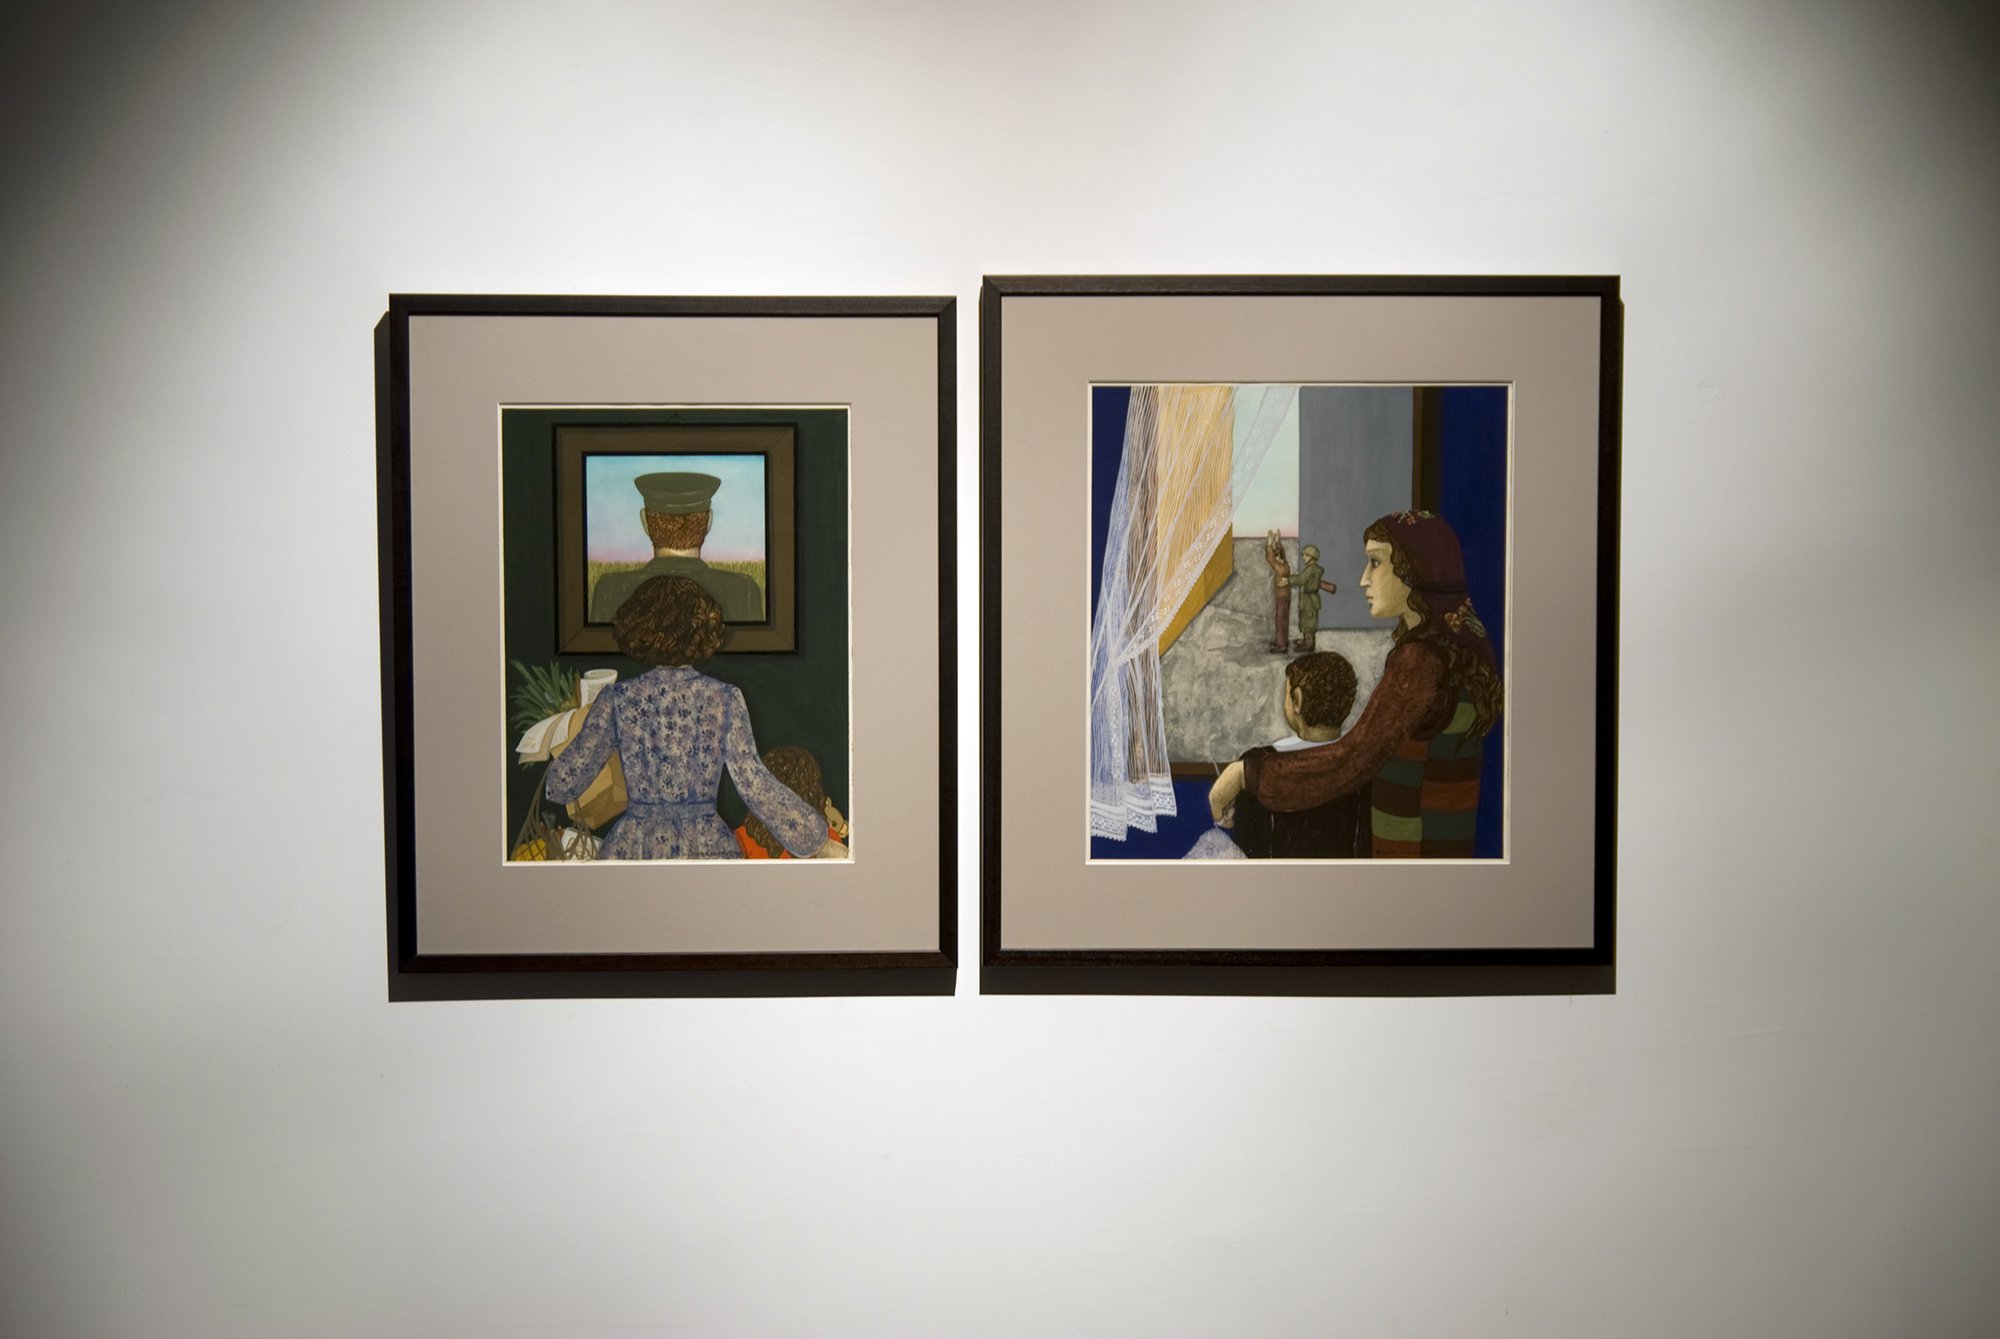 (Left) Gülsün Karamustafa, Picture, painting (frame), 70 x 59 cm, 1980. (Right) Gülsün Karamustafa, Window, painting (frame) 72.5 x 67 cm, 1980. Installation view, Opening, Rodeo, Istanbul, 2009